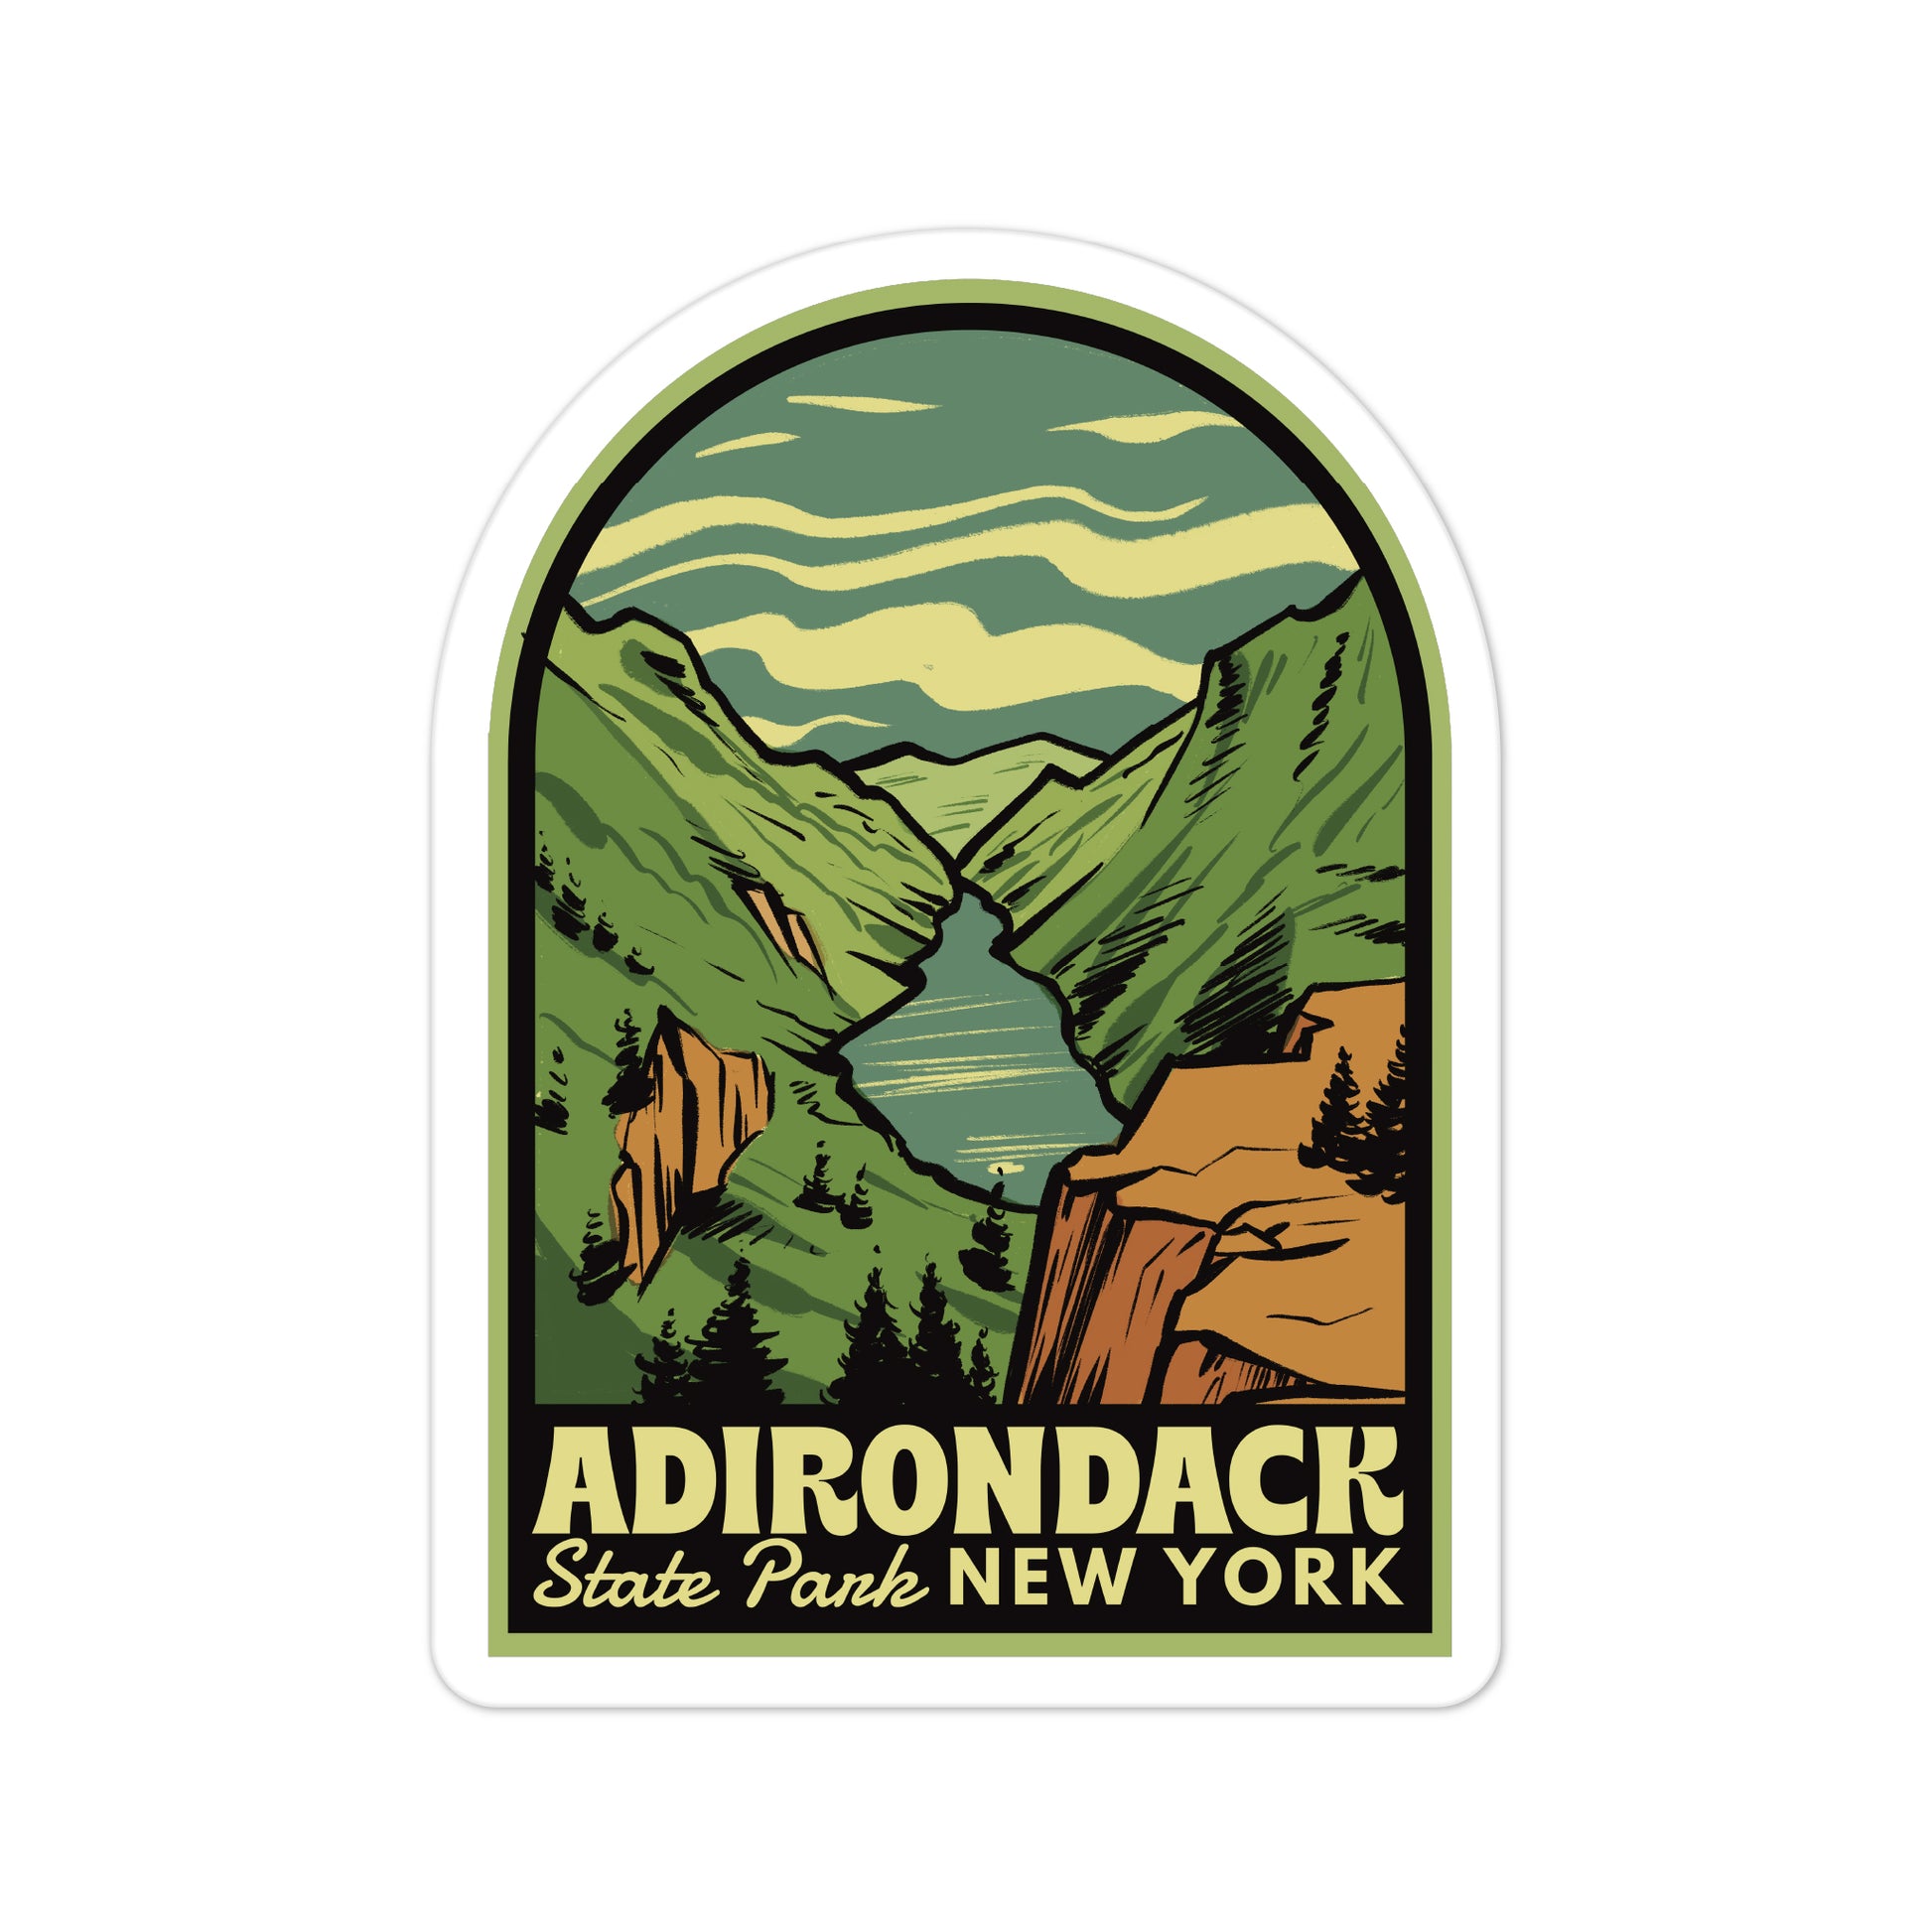 A sticker of Adirondack State Park